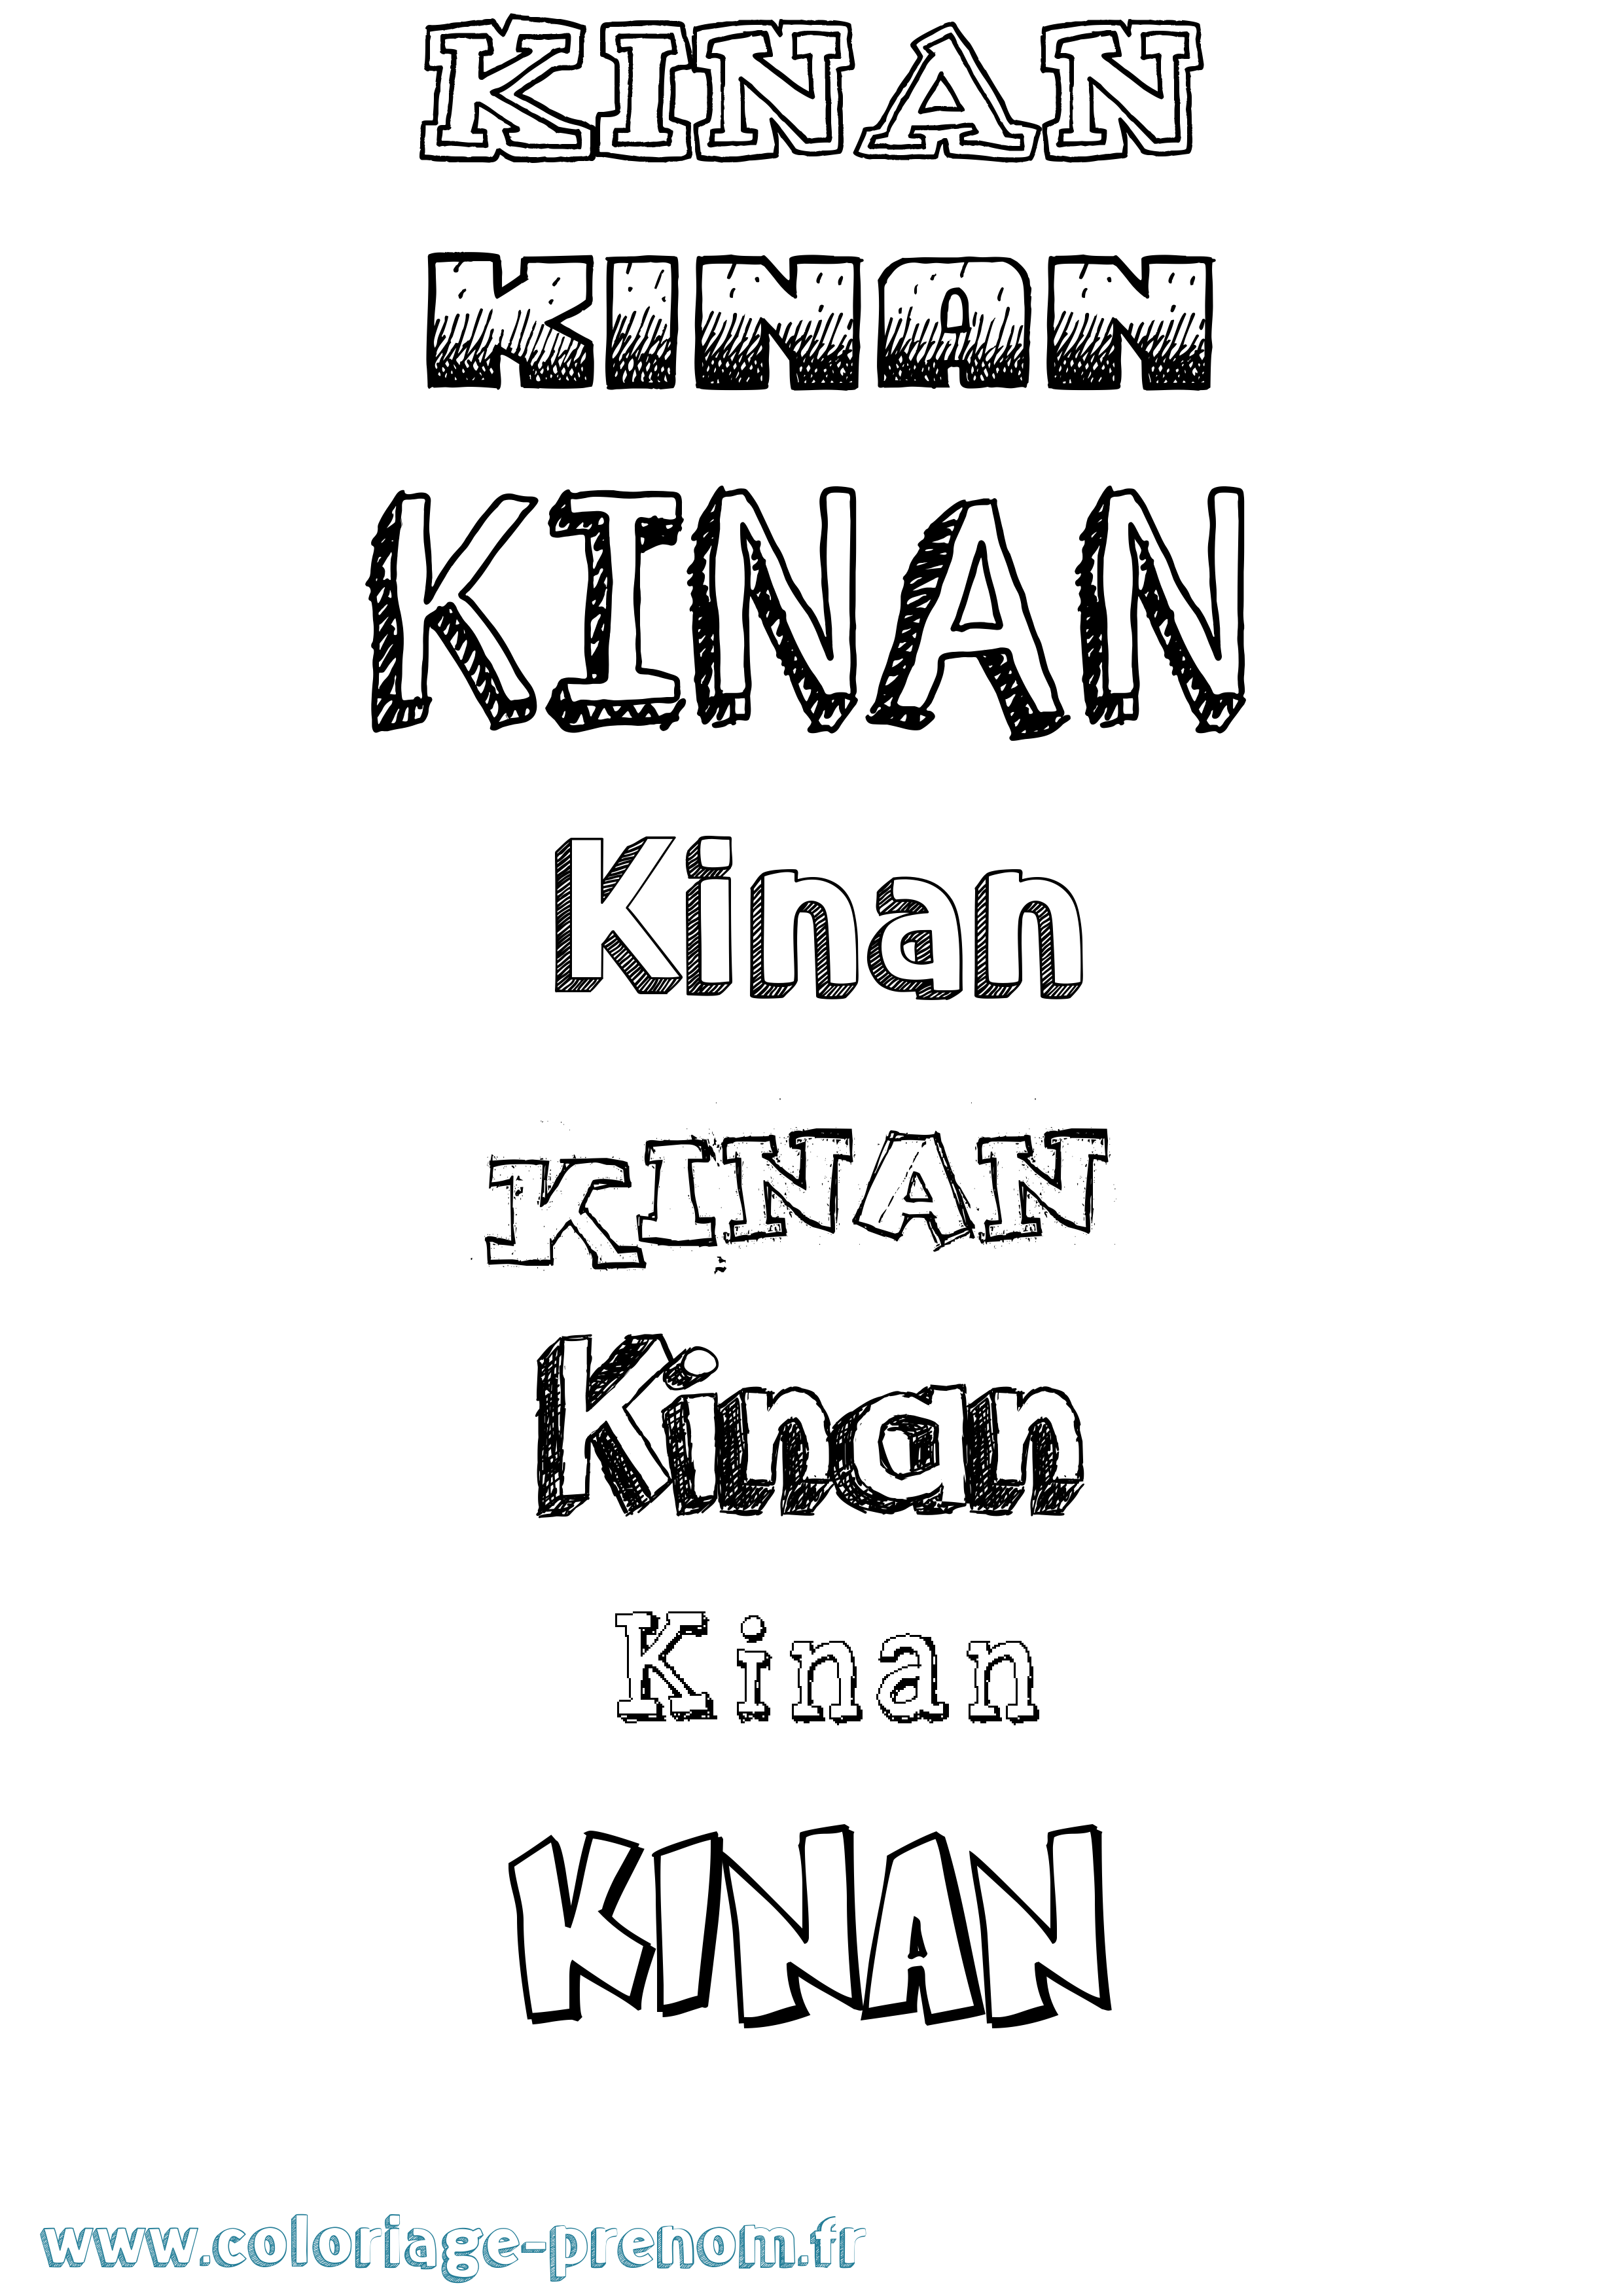 Coloriage prénom Kinan Dessiné